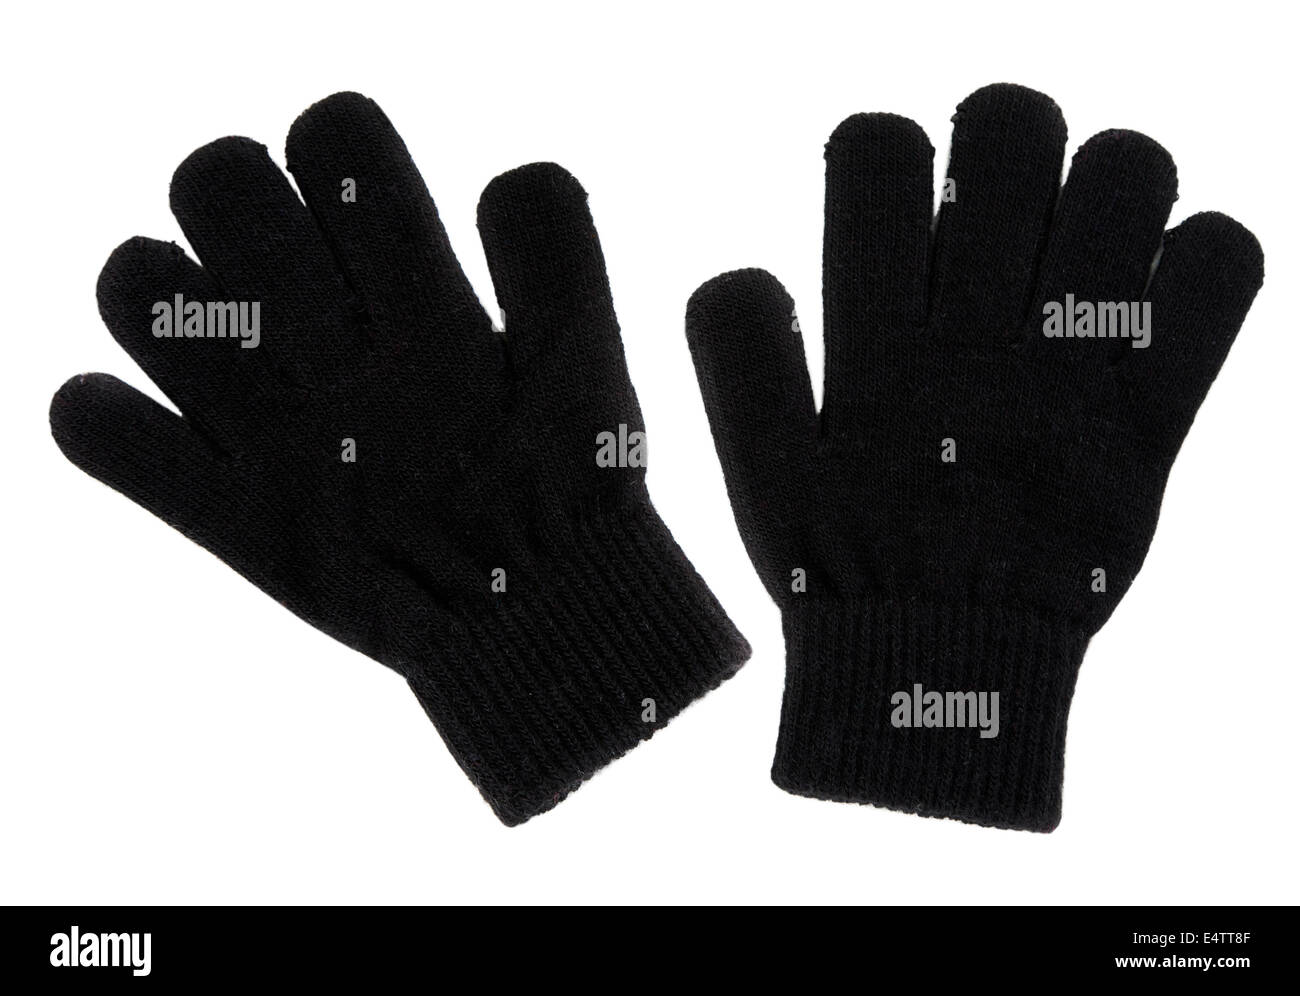 Ein paar schwarze Handschuhe Stockfotografie - Alamy